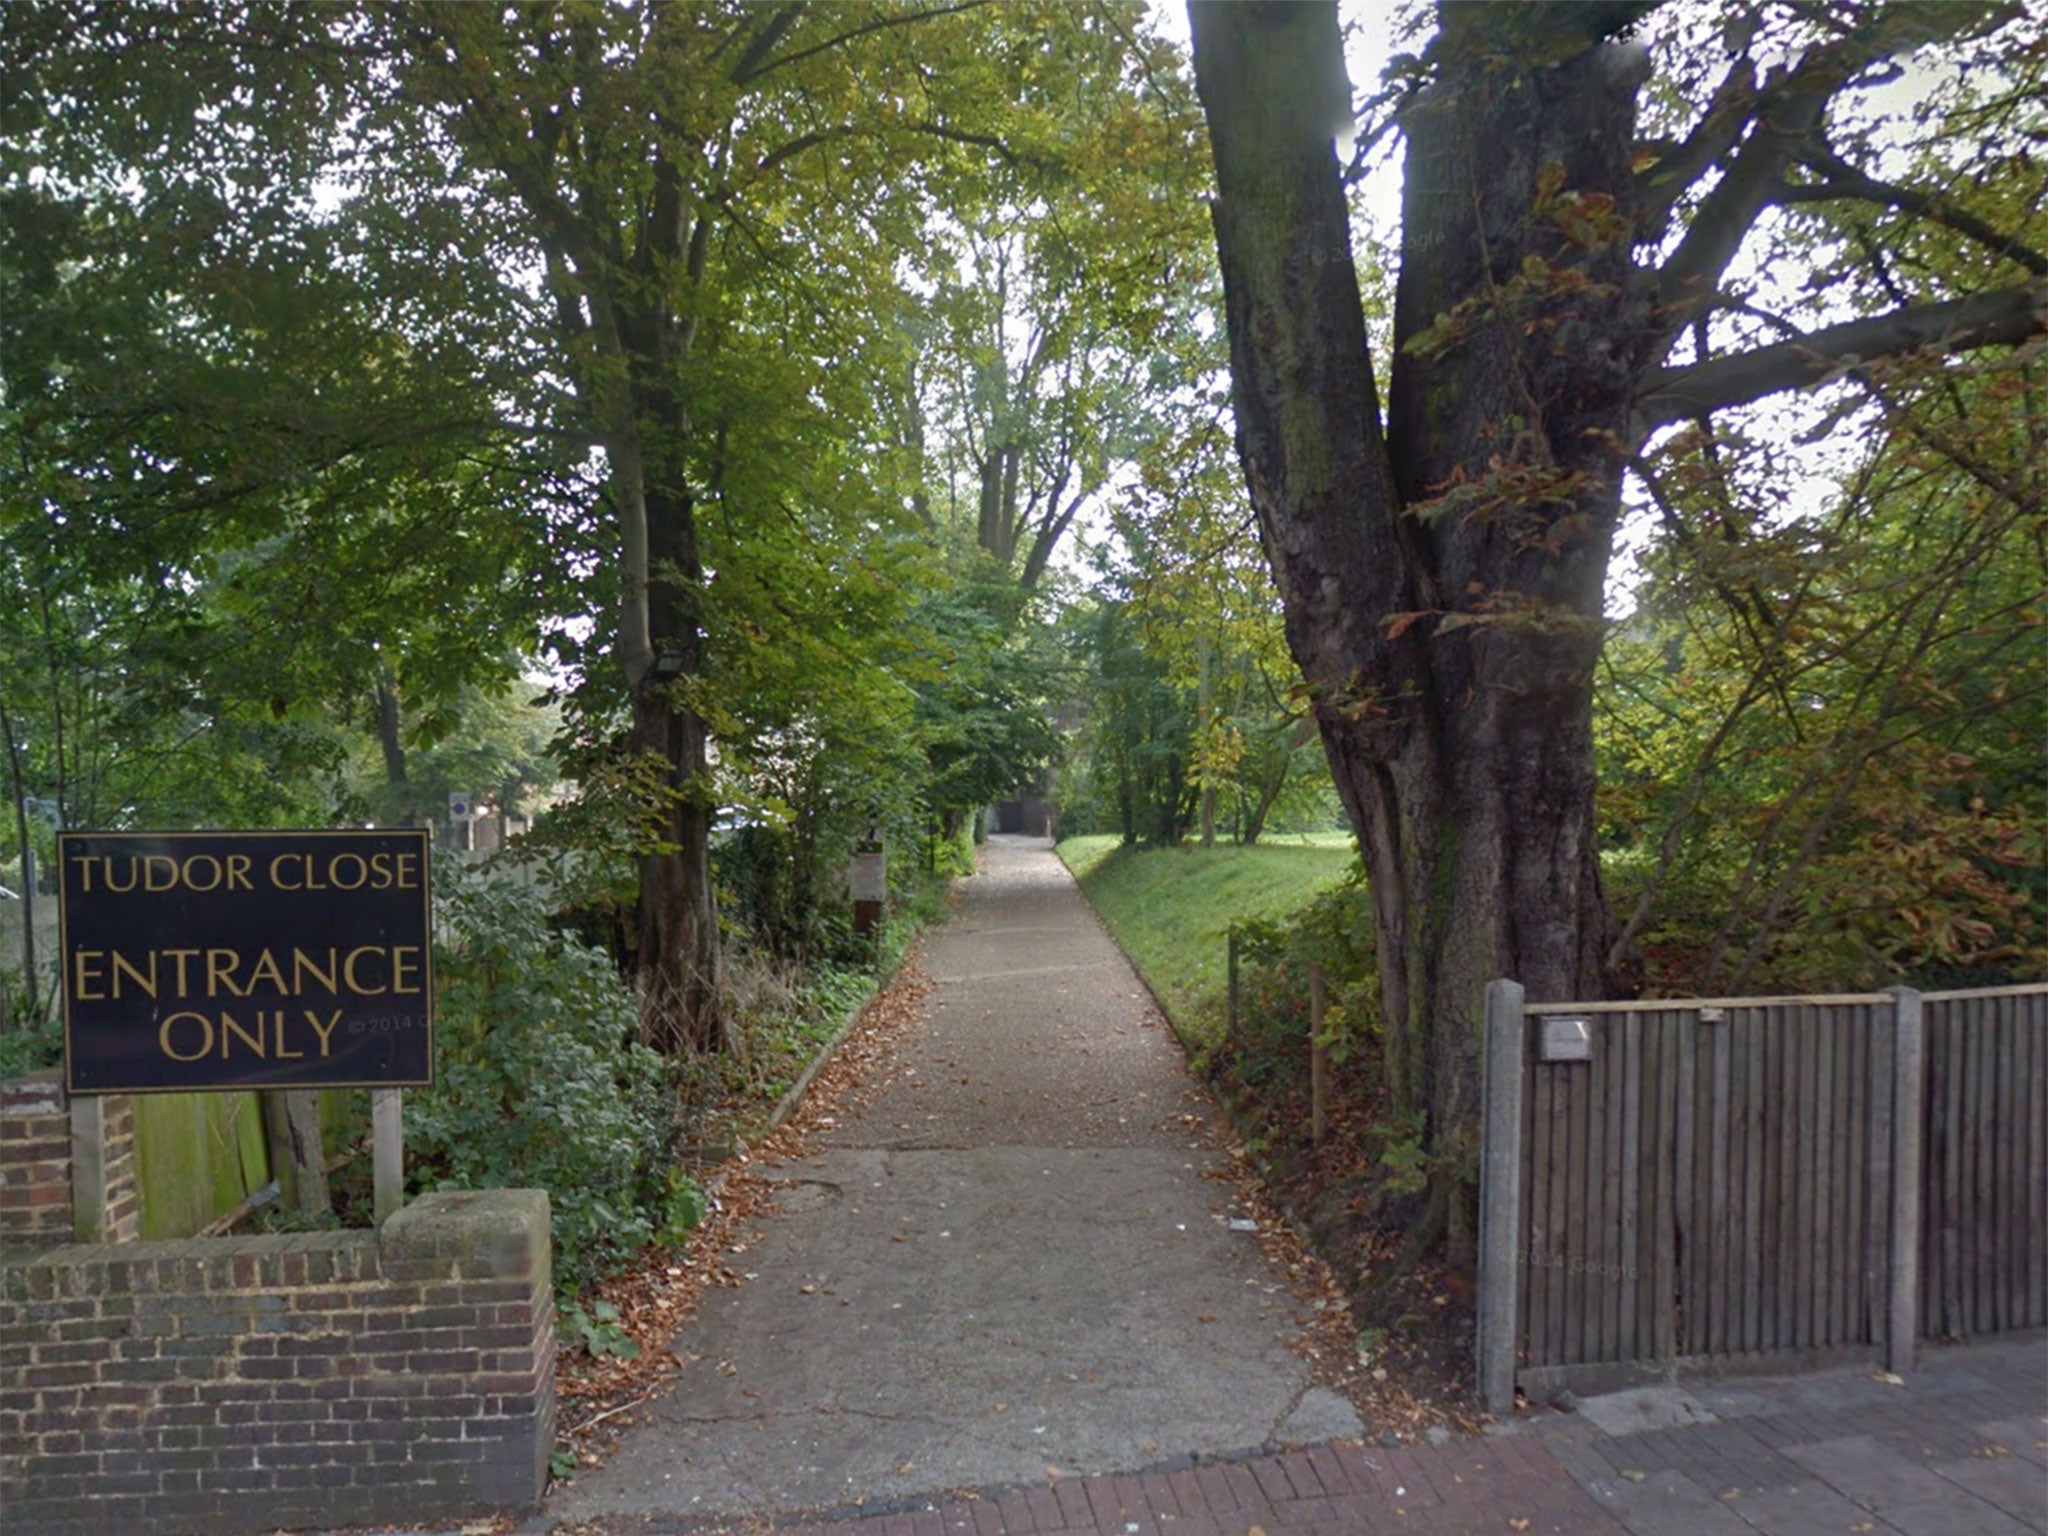 Tudor Close, where a woman was raped in Brixton